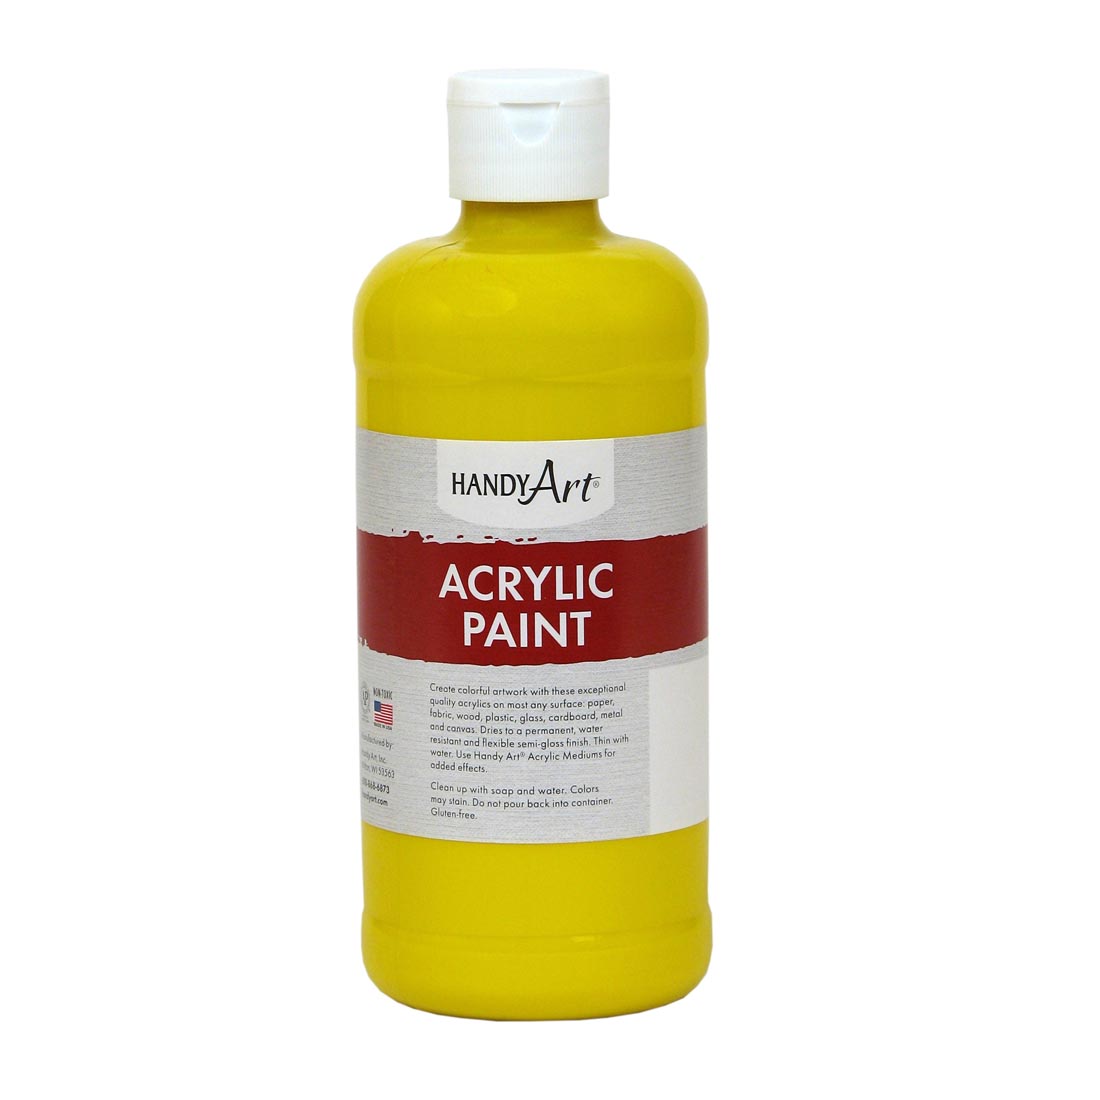 Pint Bottle of Chrome Yellow Handy Art Acrylic Paint